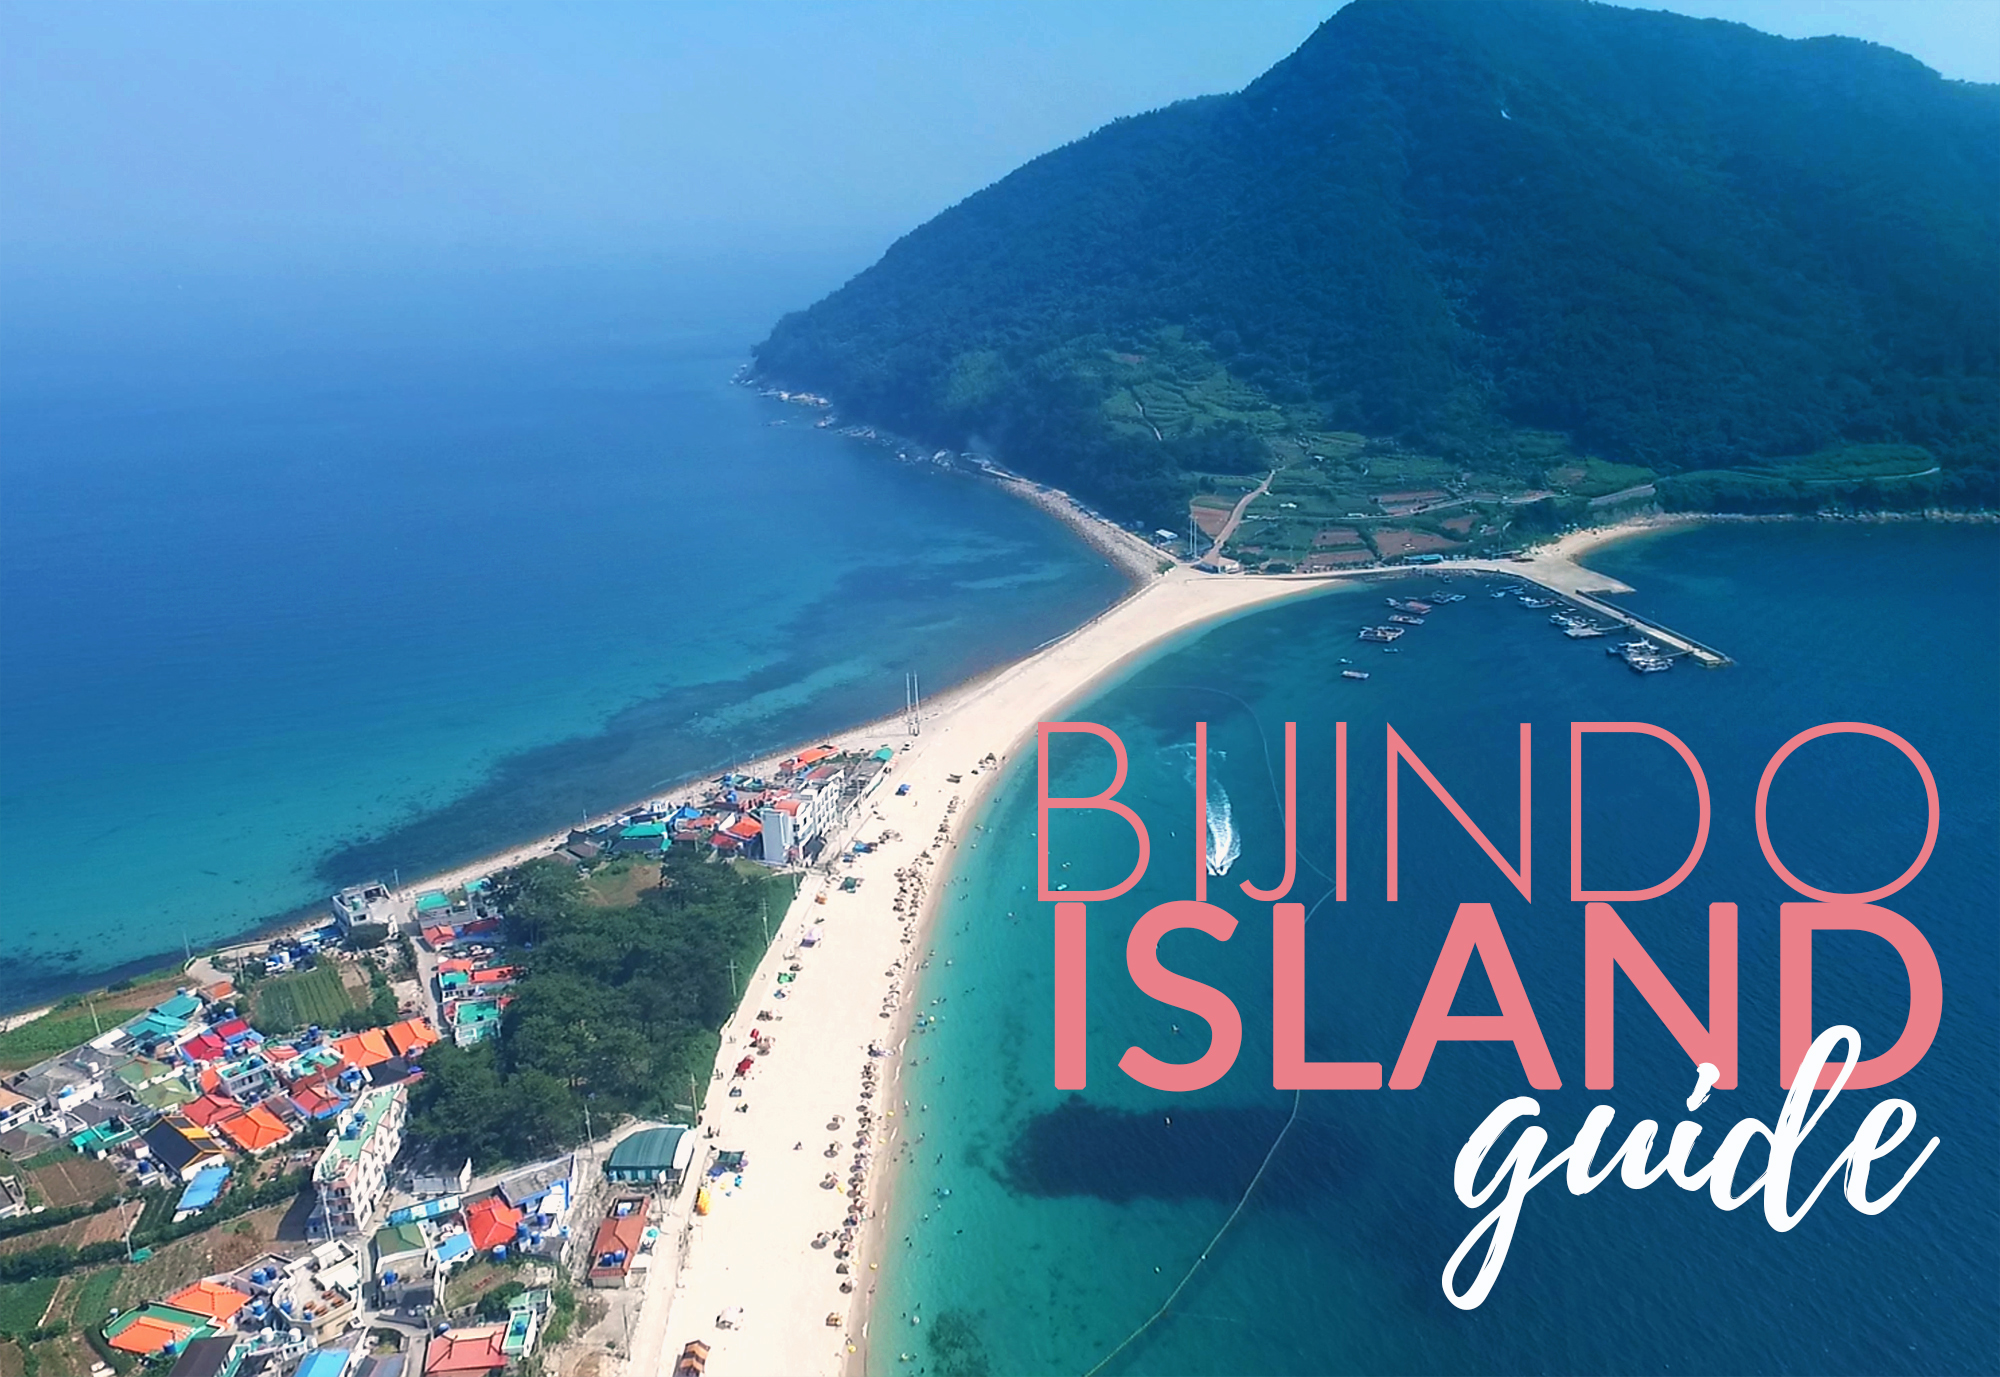 Bijindo Island Guide